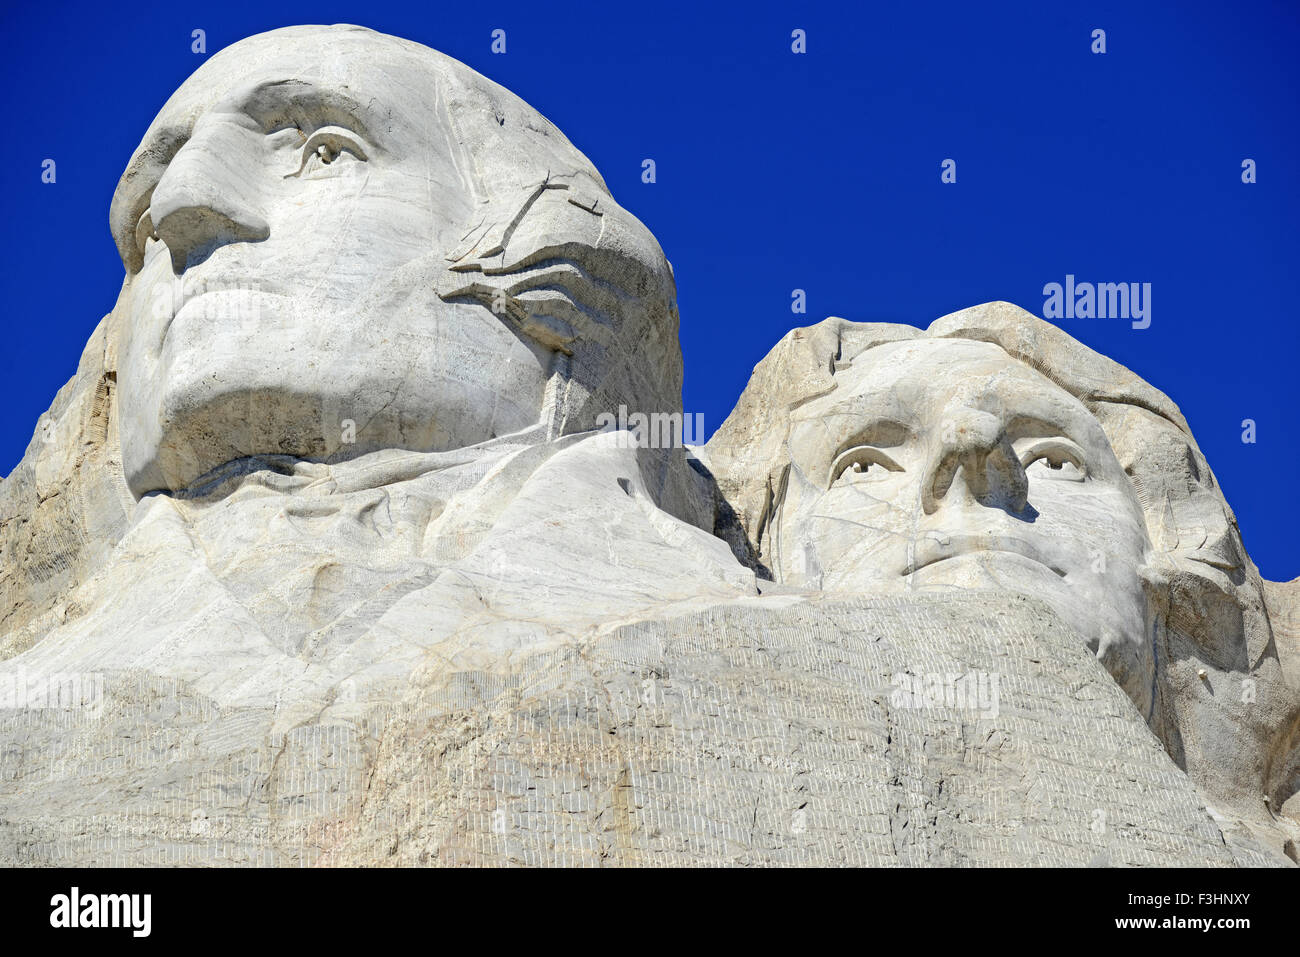 Mount Rushmore National Memorial, symbol of America located in the Black Hills, South Dakota, USA Stock Photo